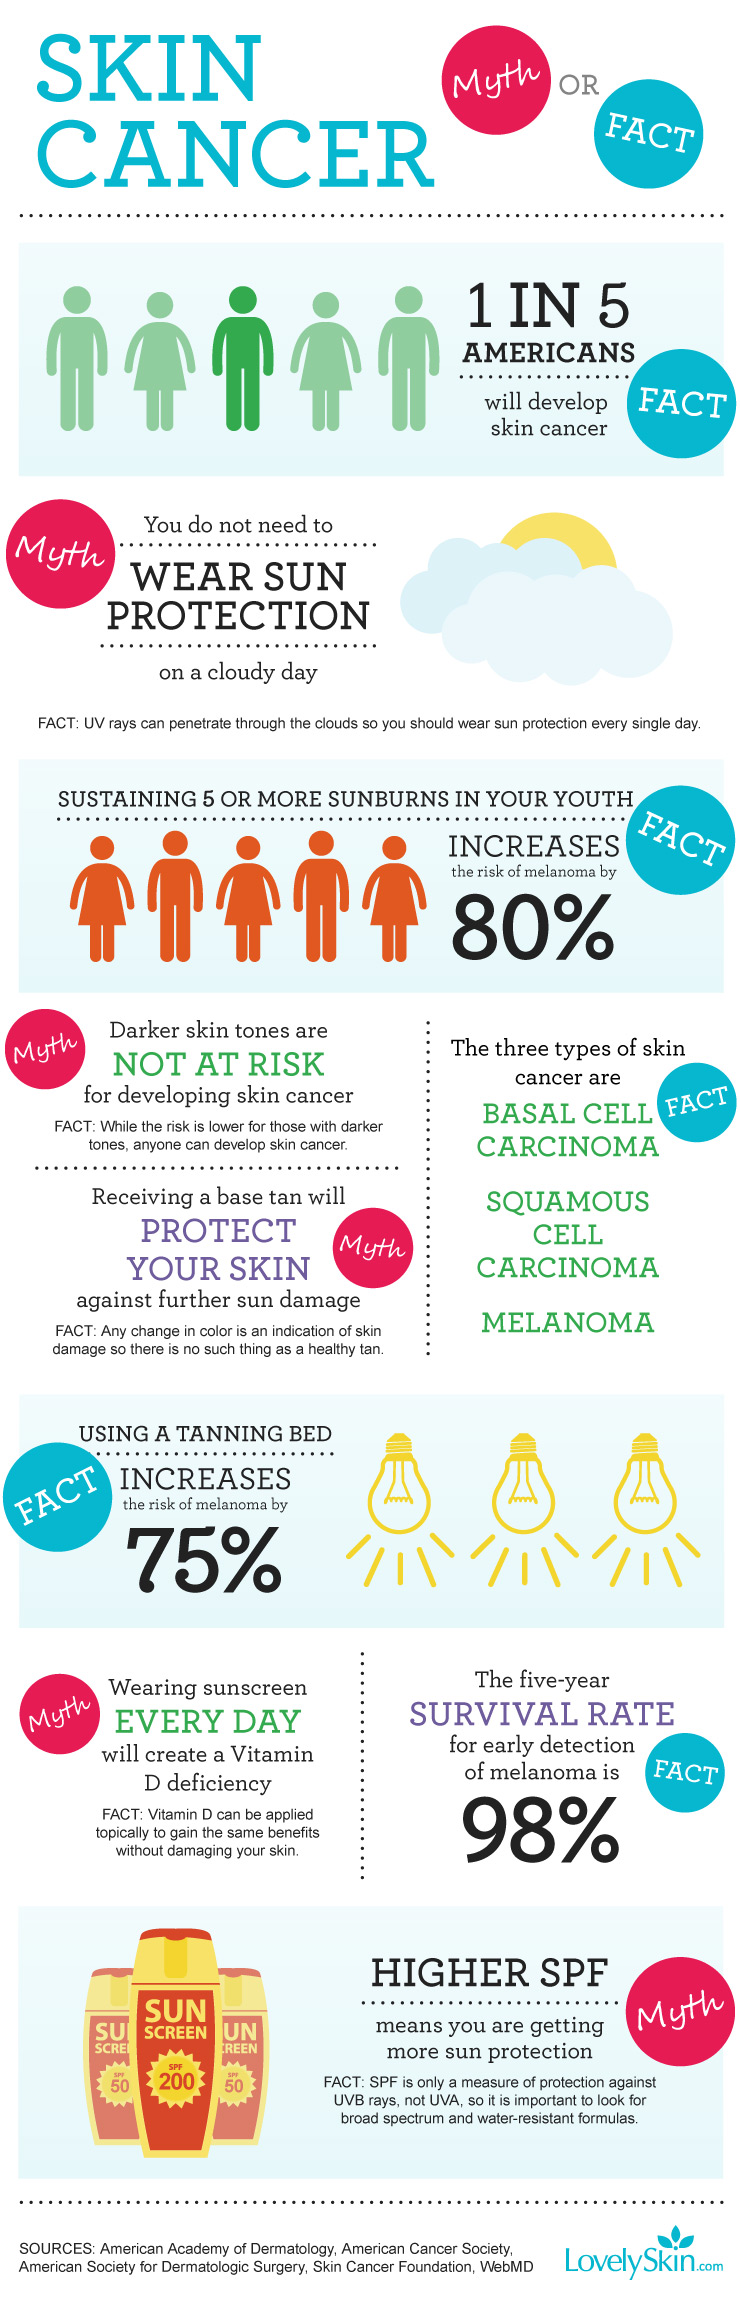 Skin Cancer - Myth or Fact